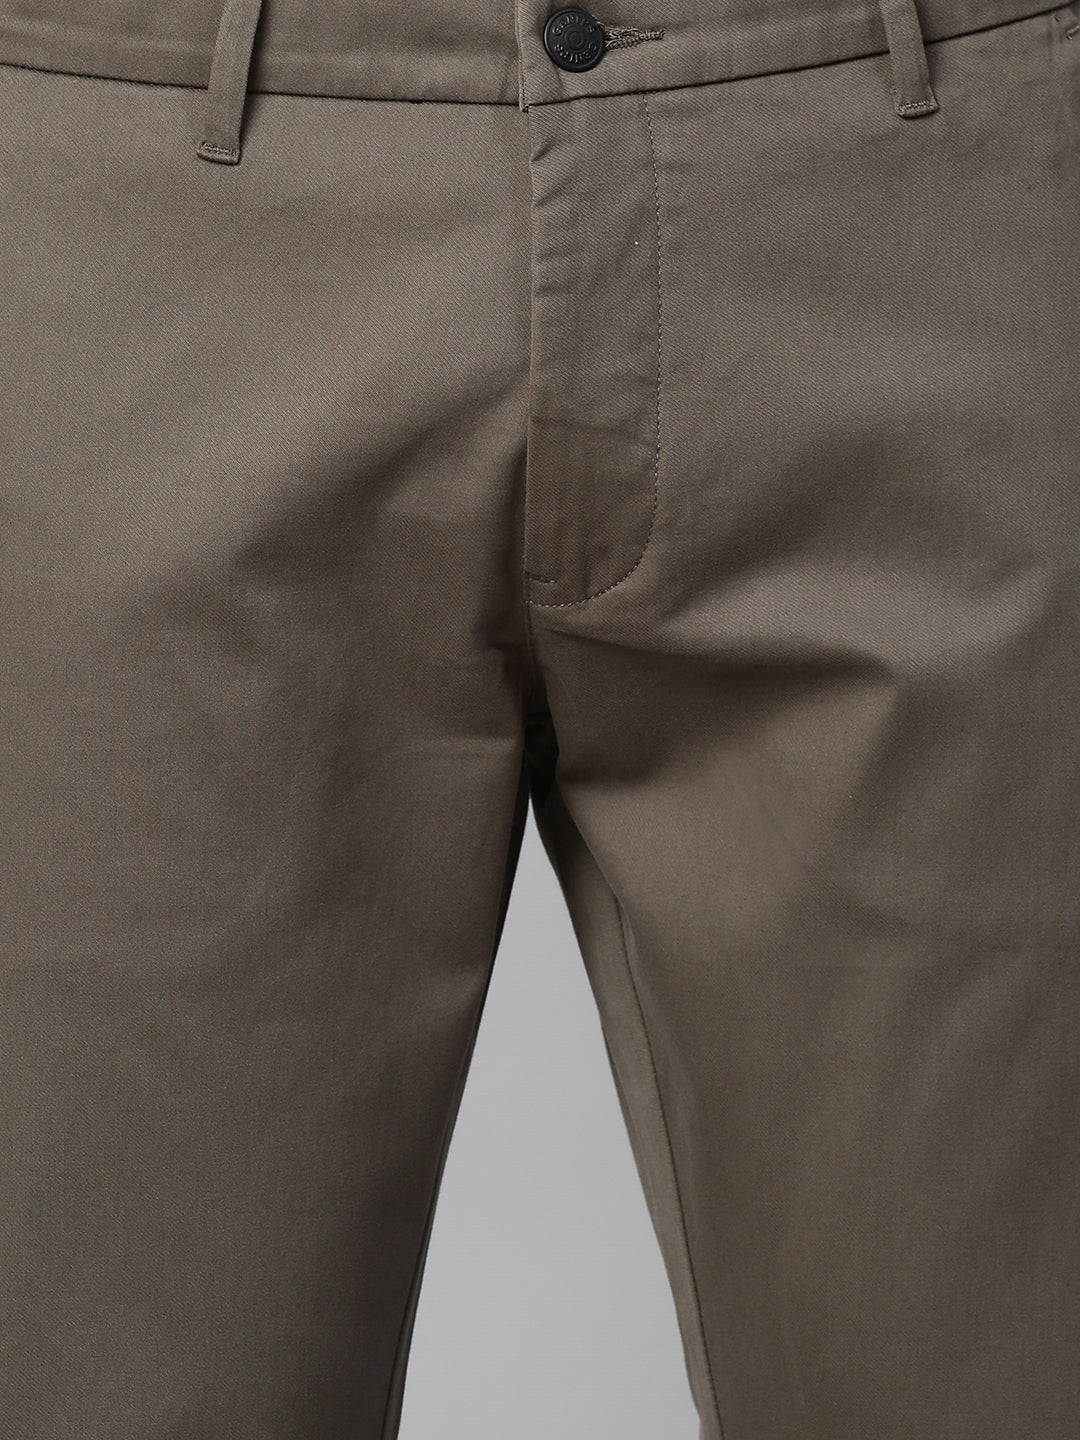 Genips Men's Dark Grey Cotton Stretch Caribbean Slim Fit Solid Trousers